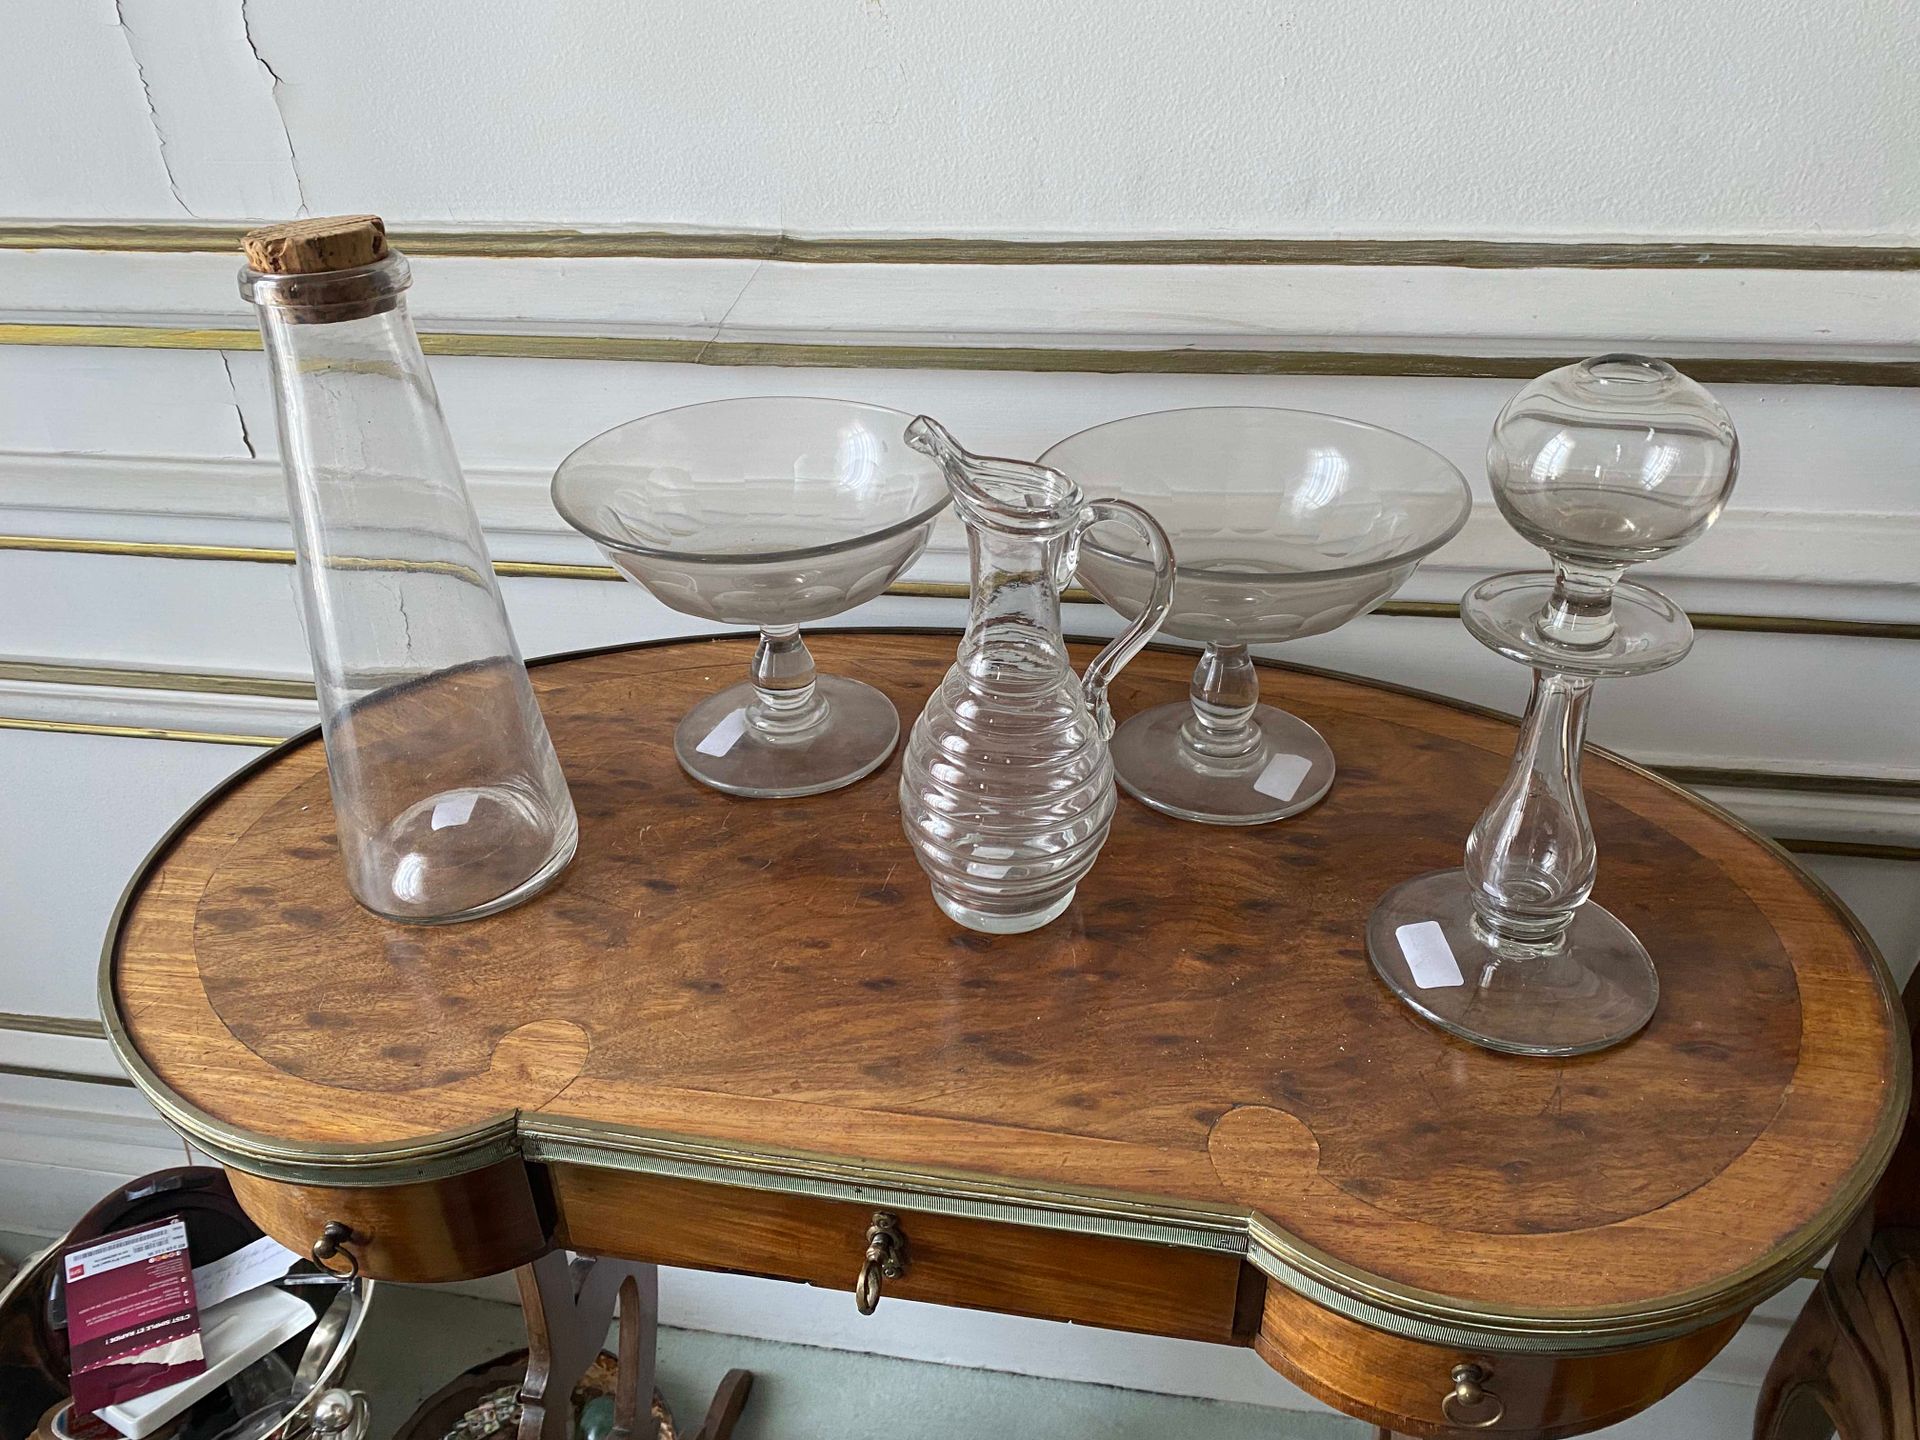 Null 玻璃套装包括两个展示架，一个瓶子，一个苹果酒壶和一个油灯。

H.30厘米（用于最大的）。